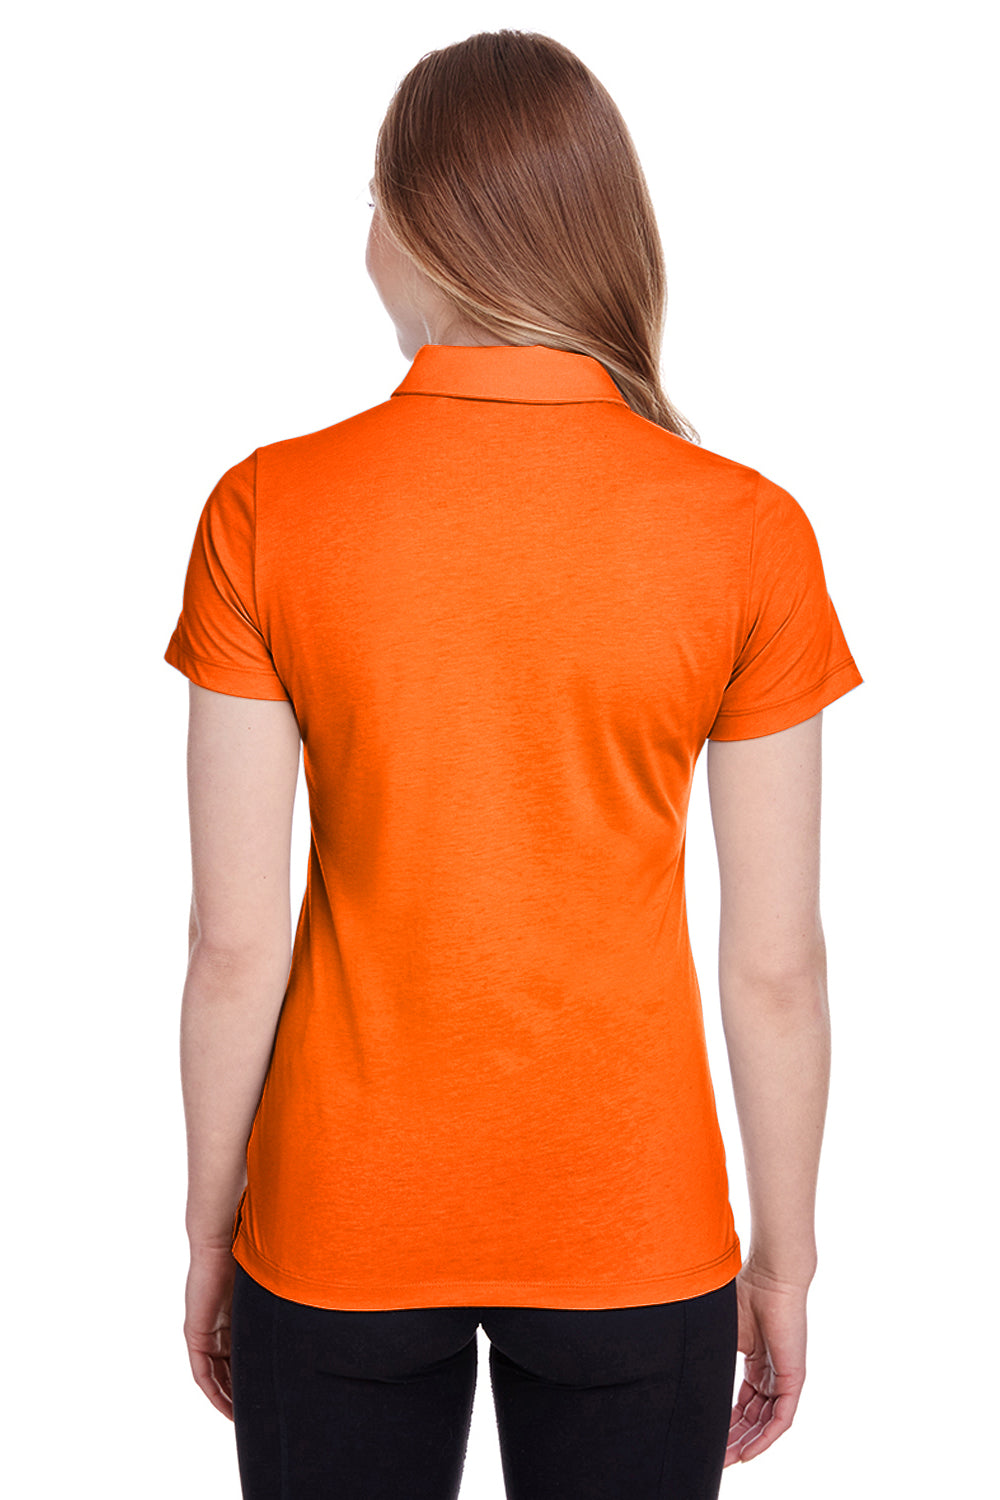 Puma 596921 Womens Fusion Performance Moisture Wicking Short Sleeve Polo Shirt Orange Back